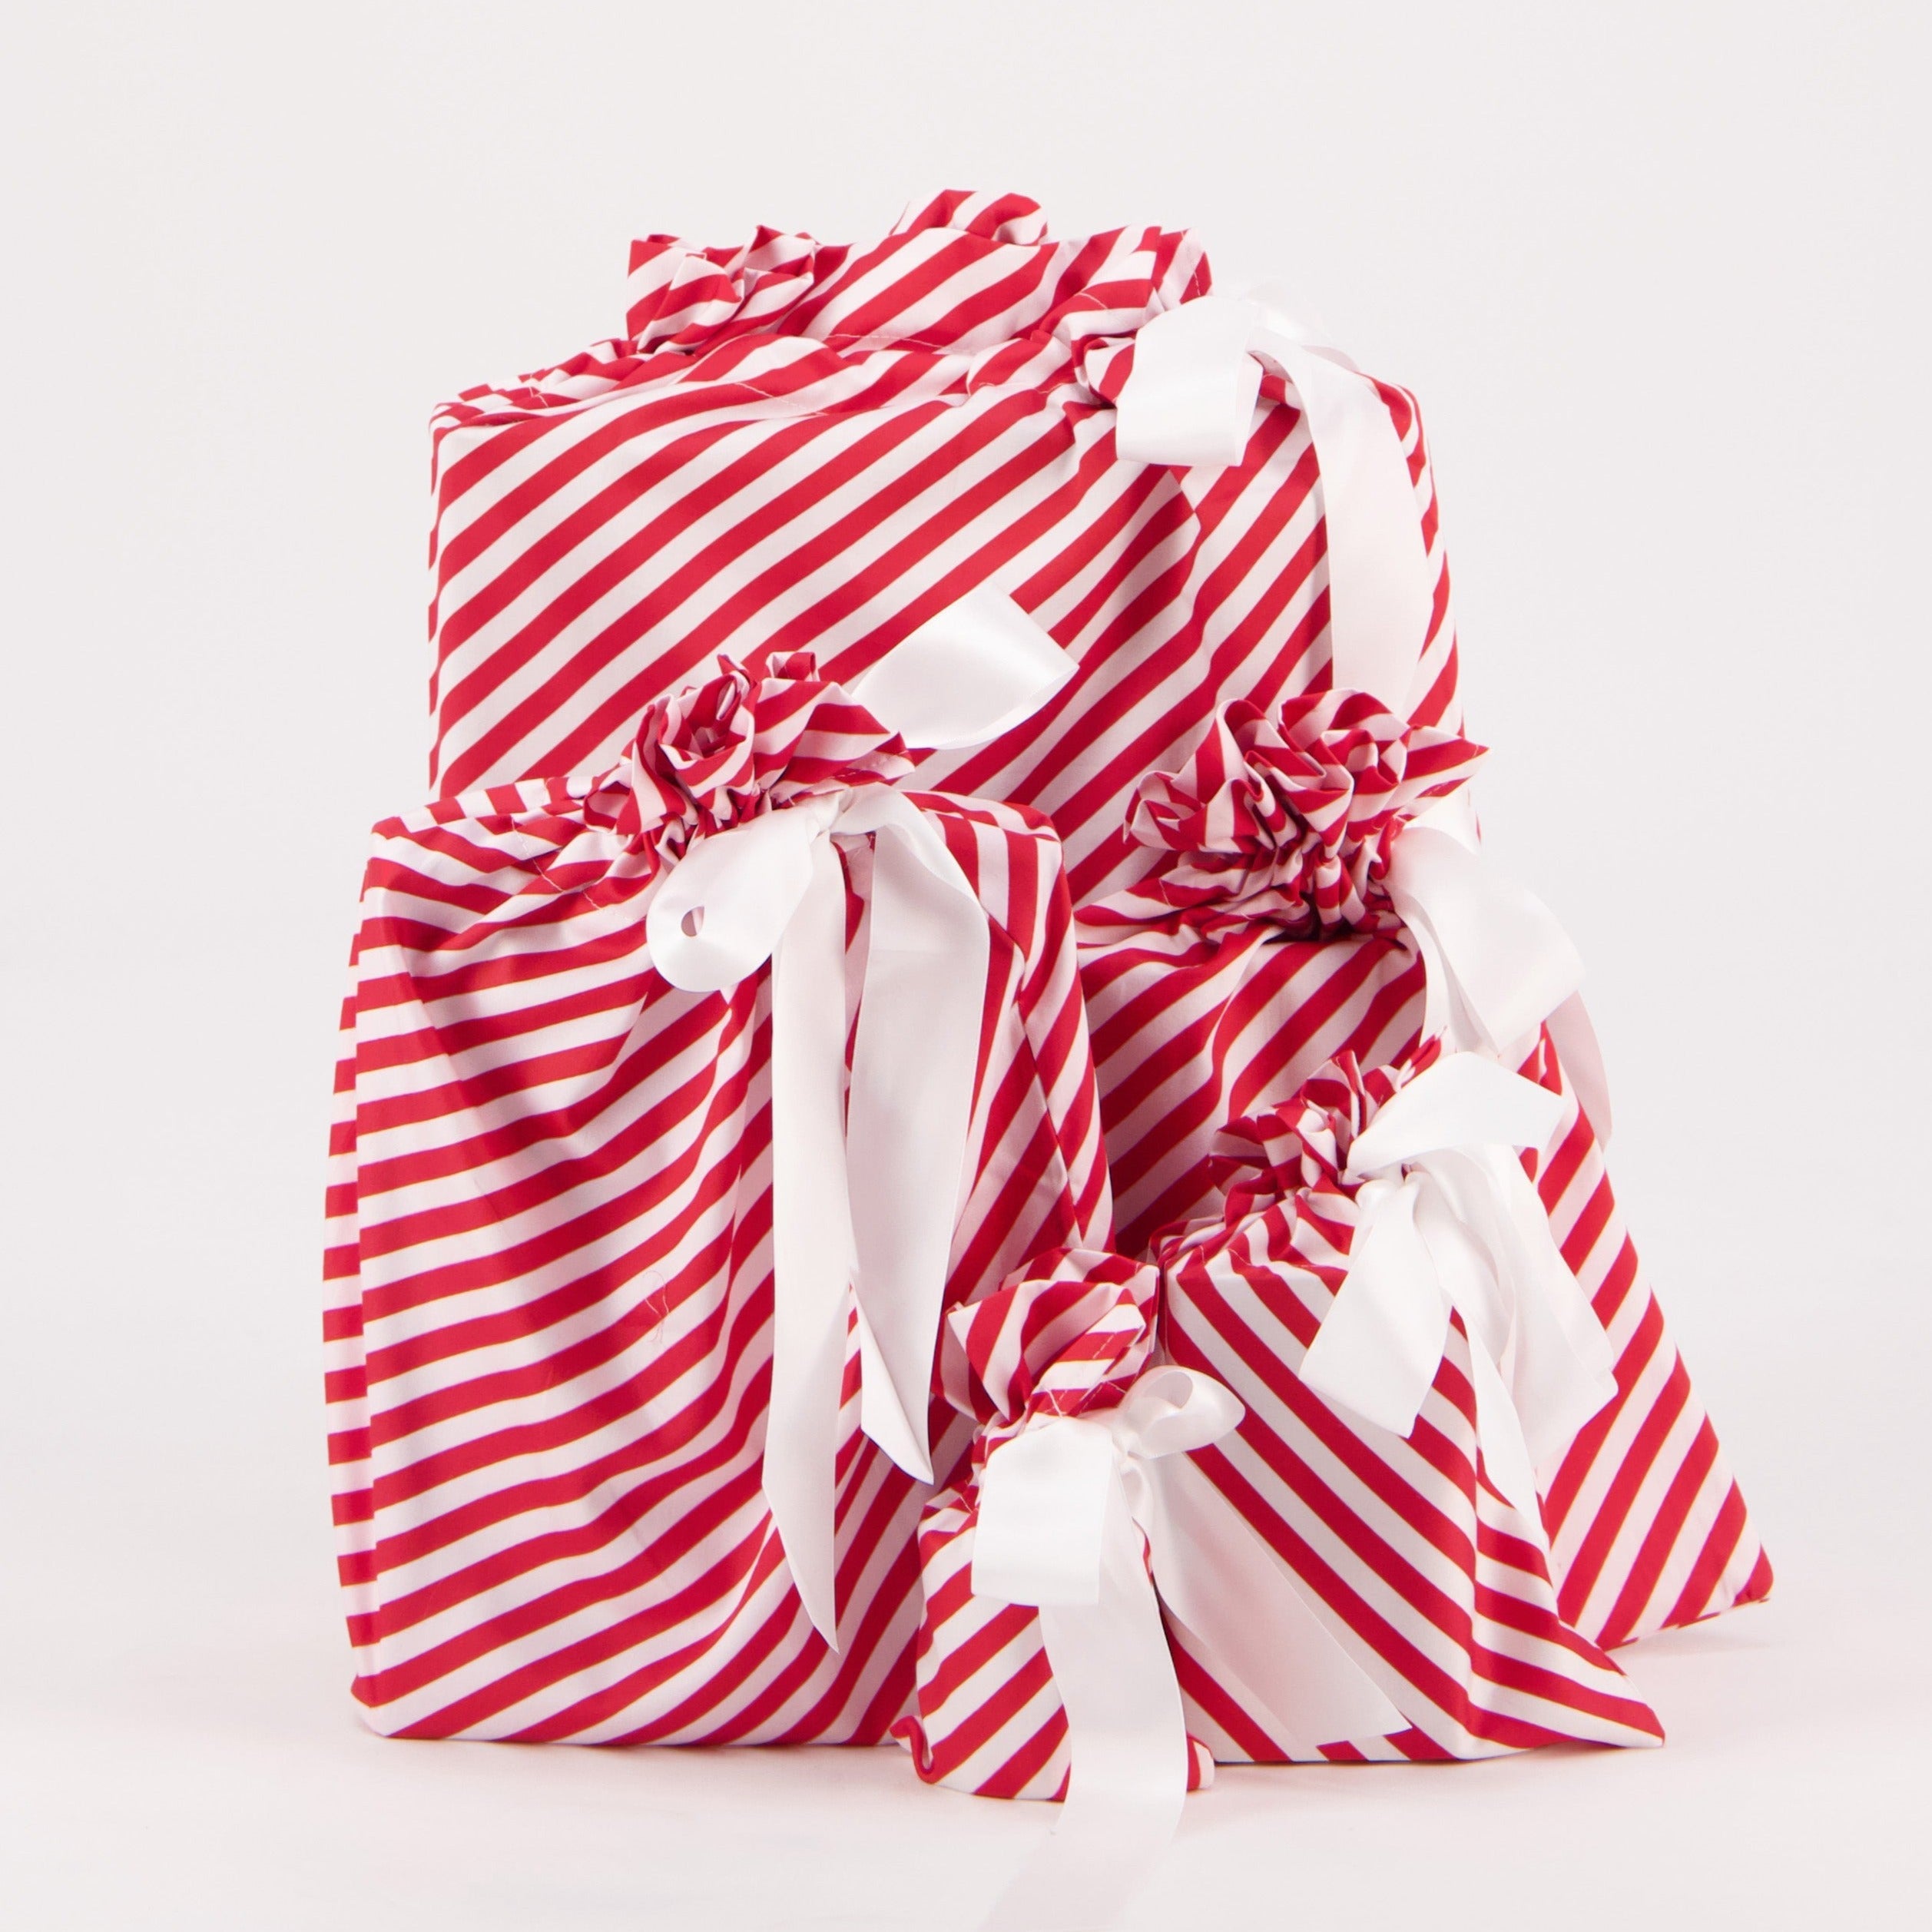 Candy Cane (Reusable Gift Bag Set)